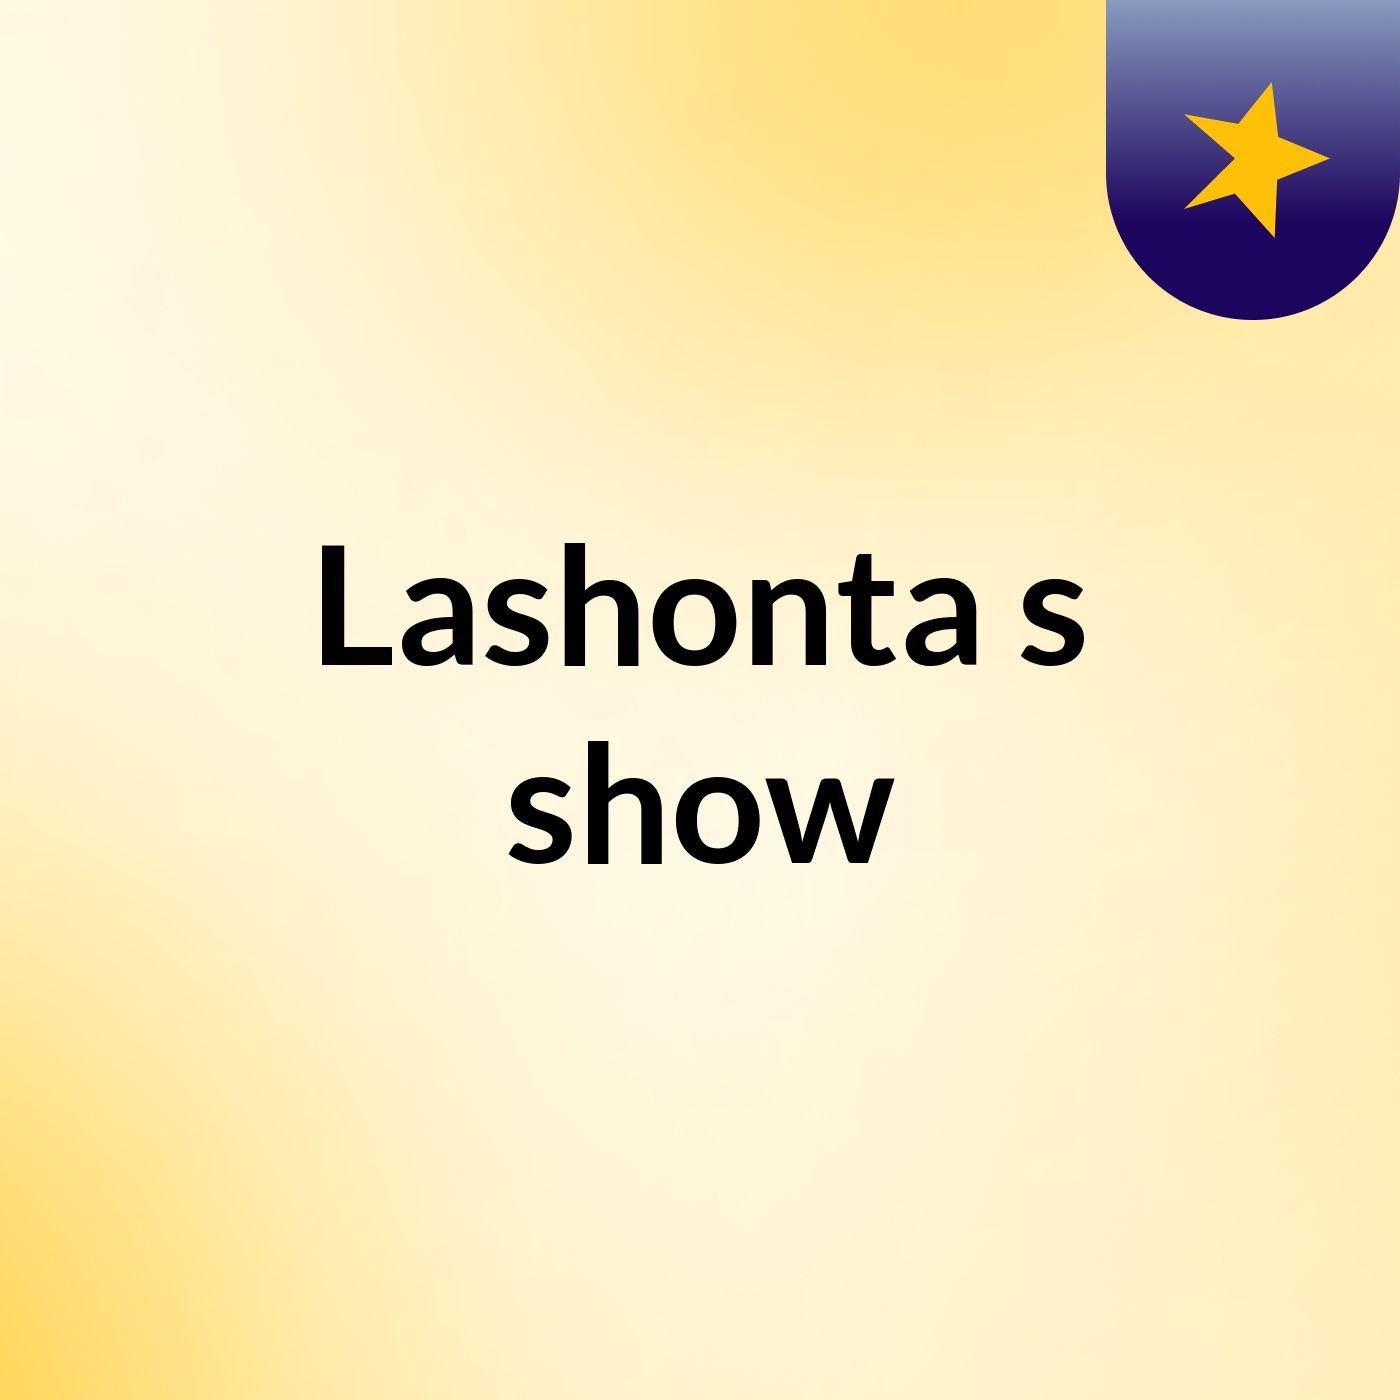 Lashonta's show